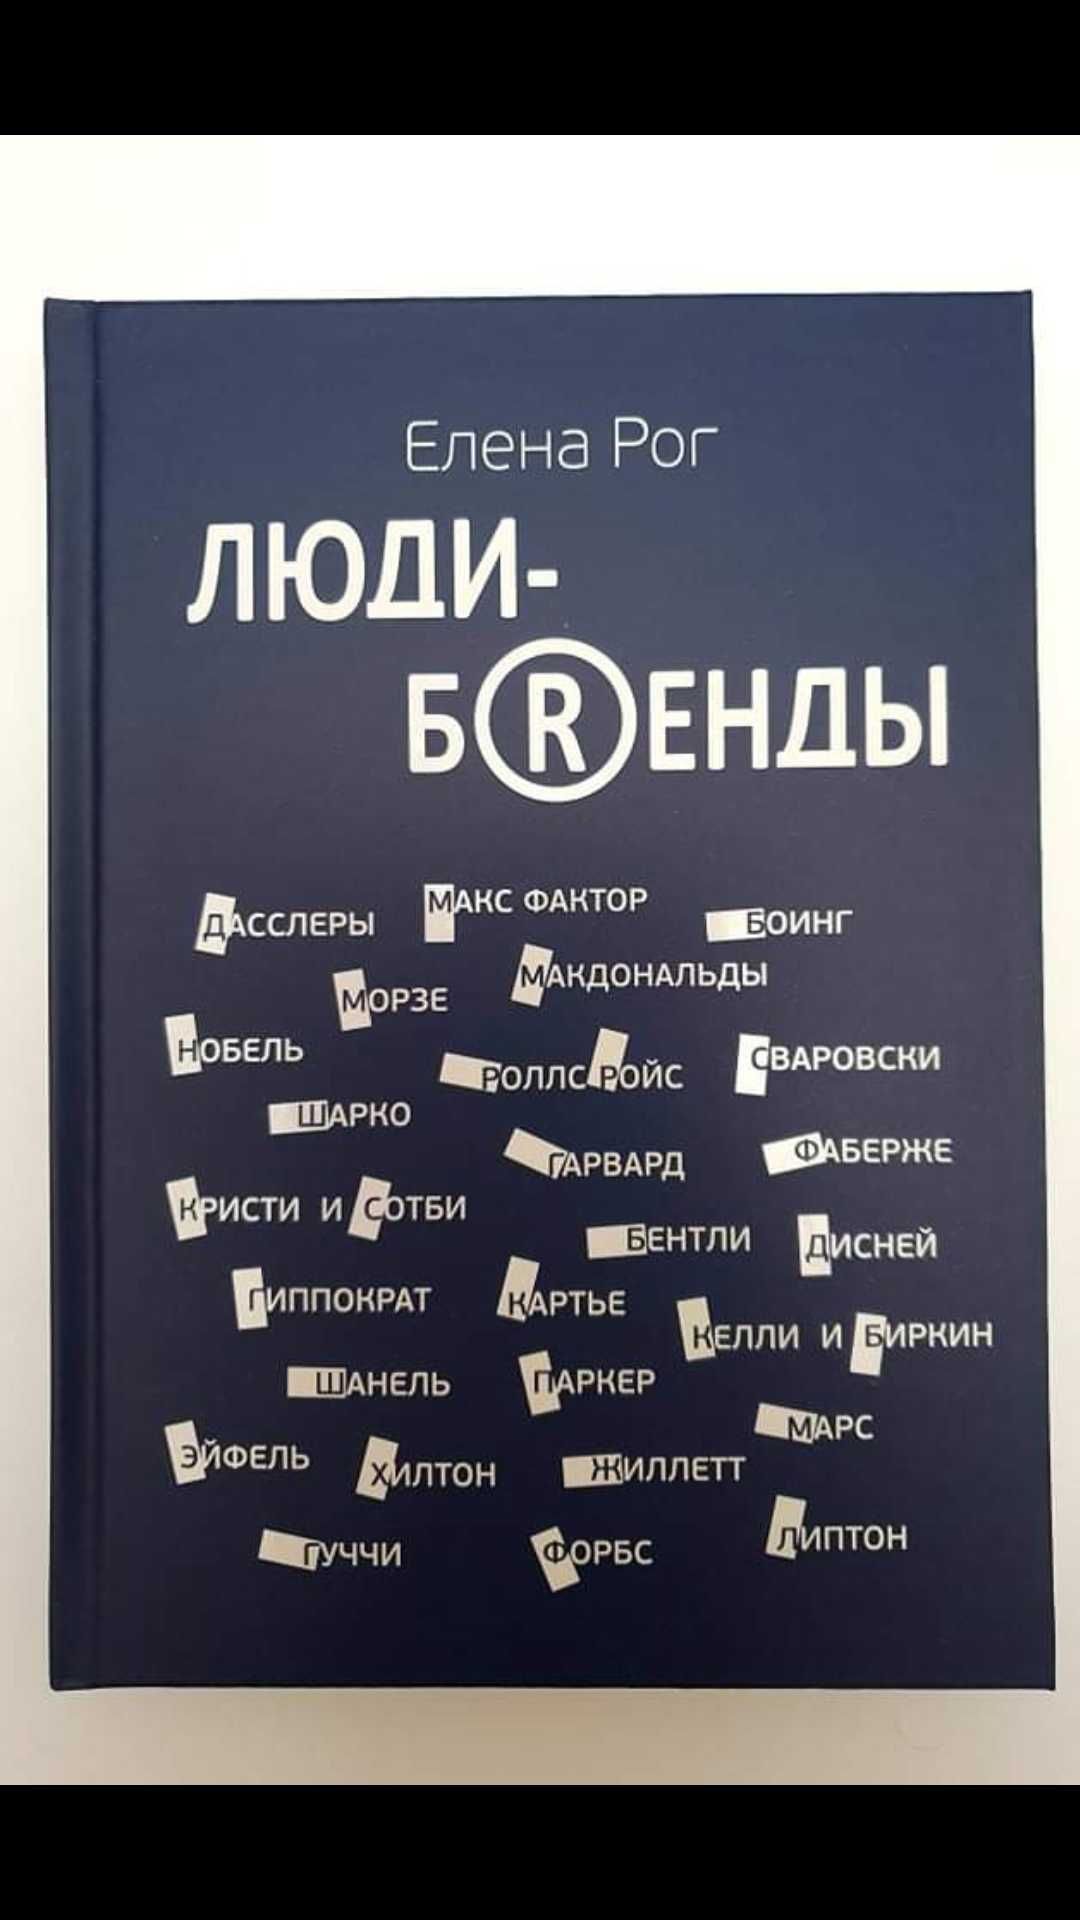 Книга Елены РОГ "Люди-бренды"